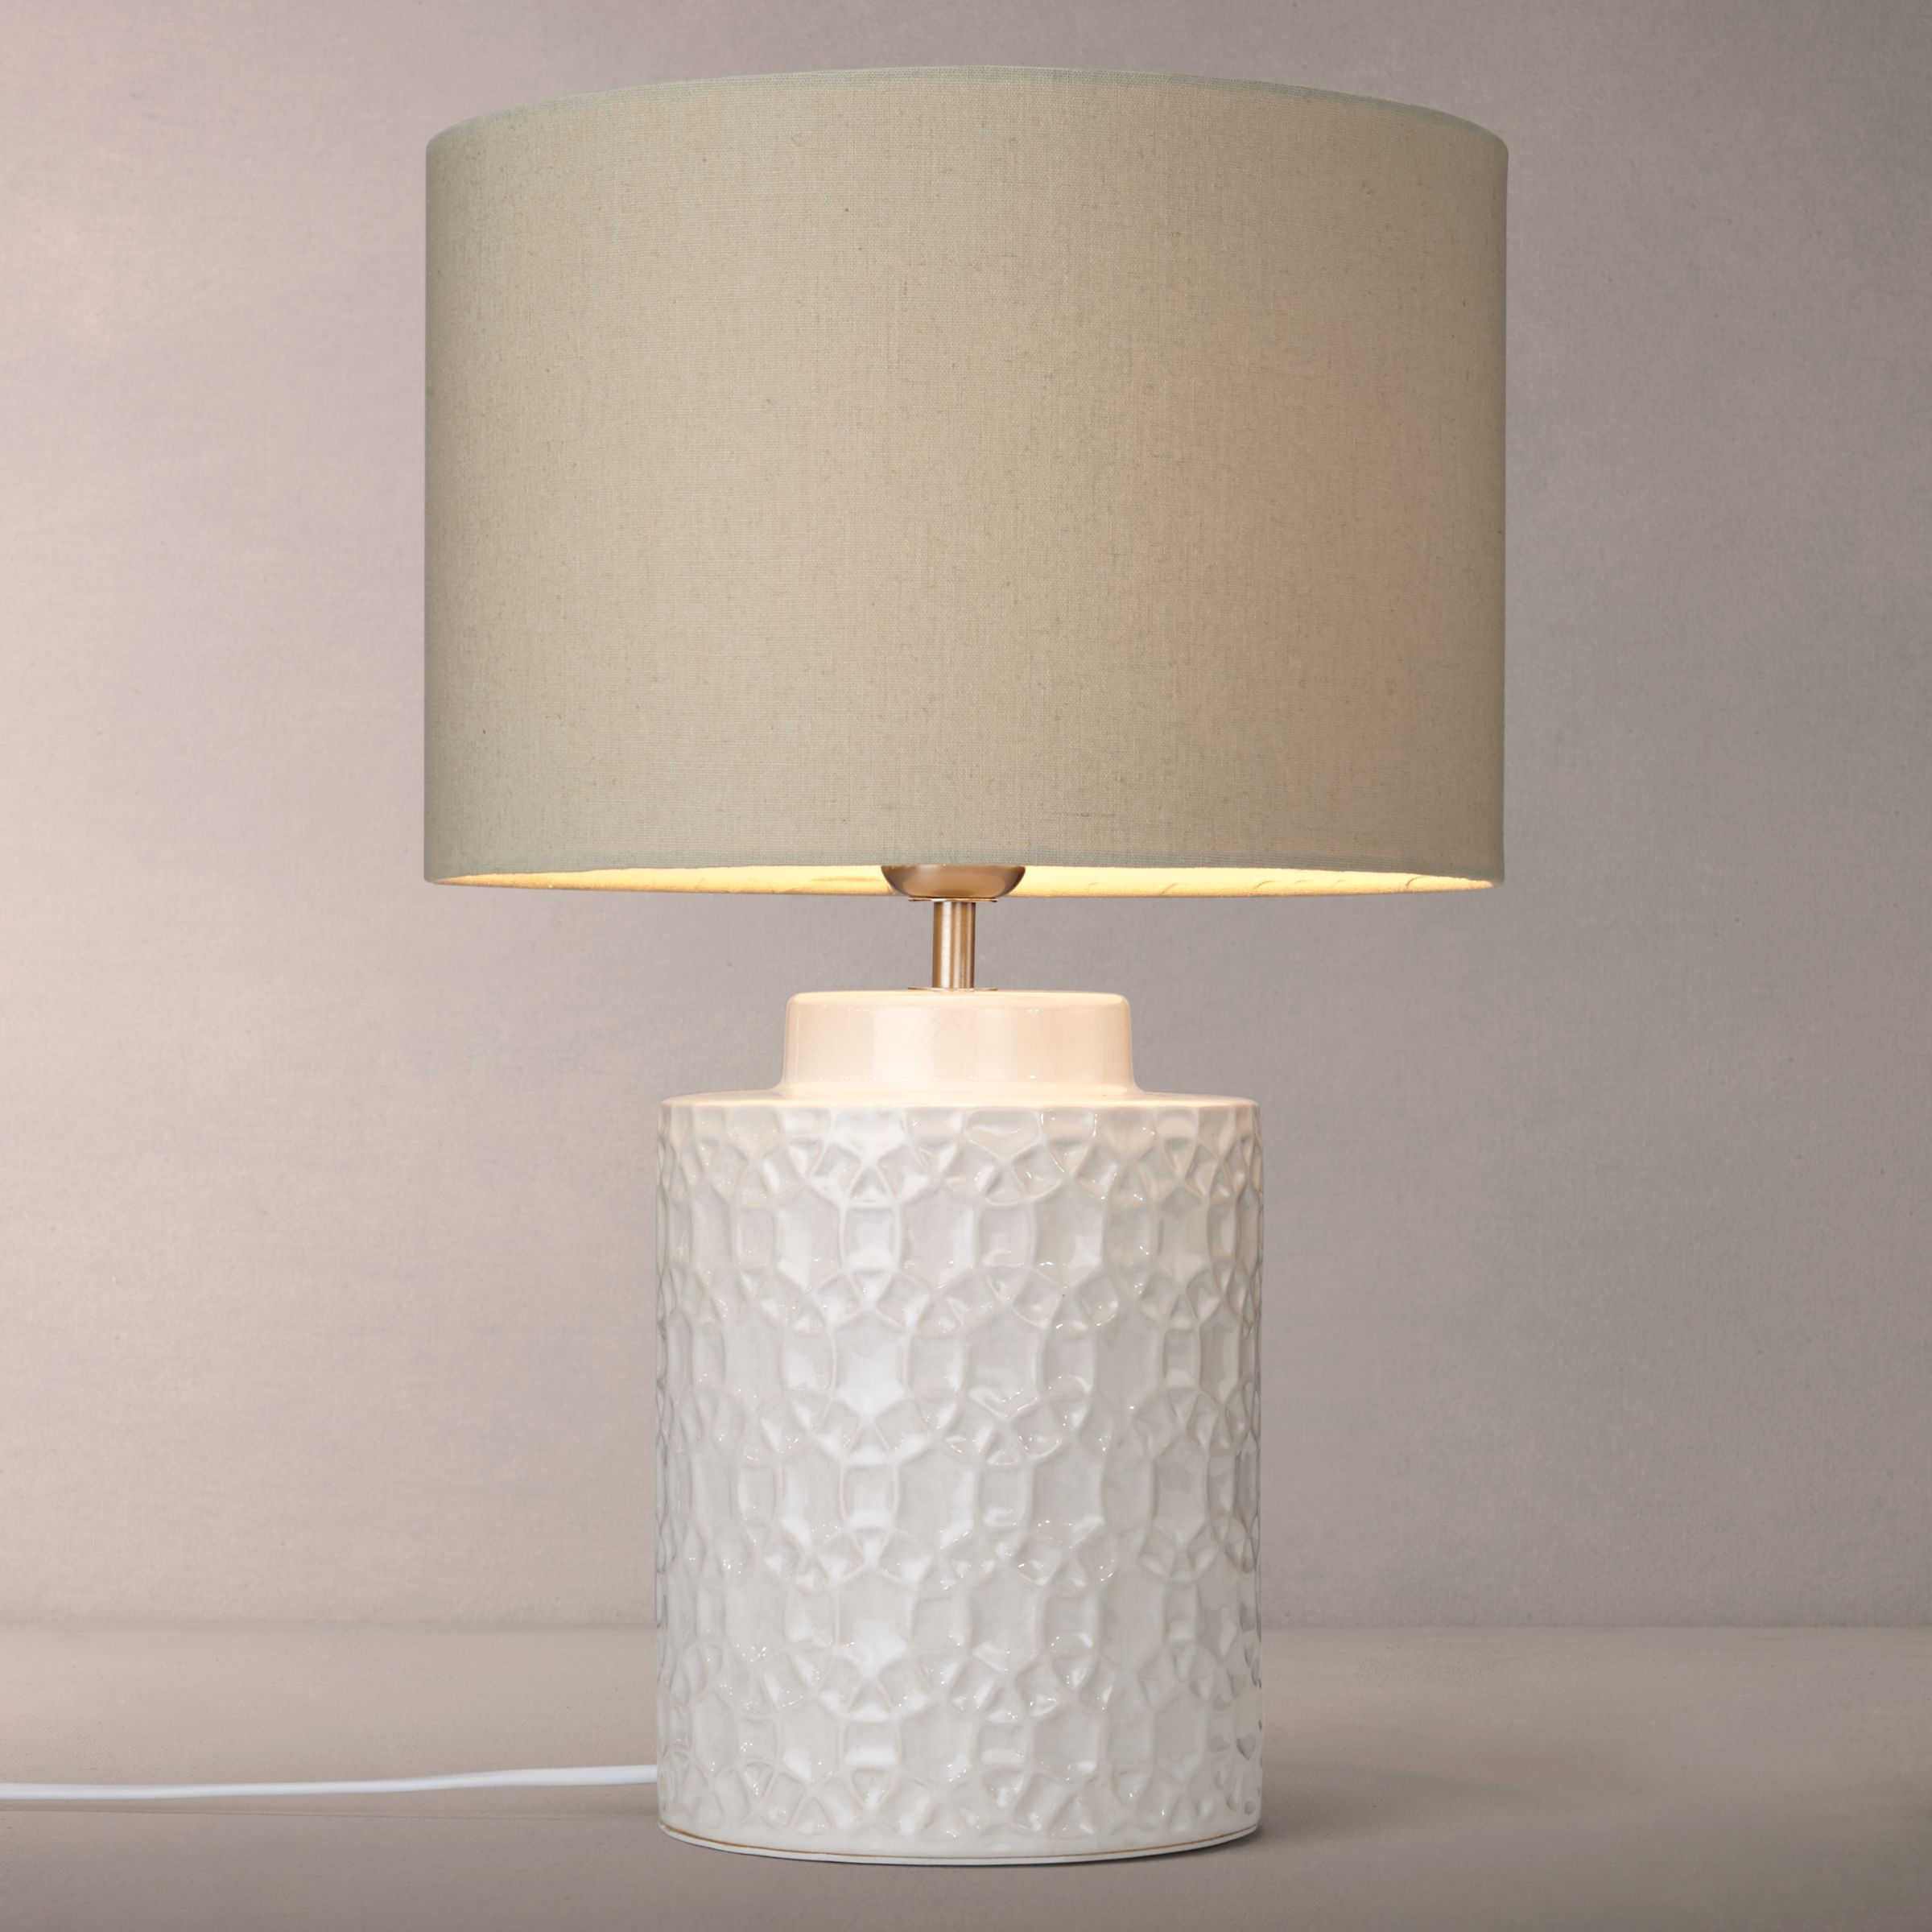 John Lewis & Partners Lulworth Ceramic Table Lamps, Ivory